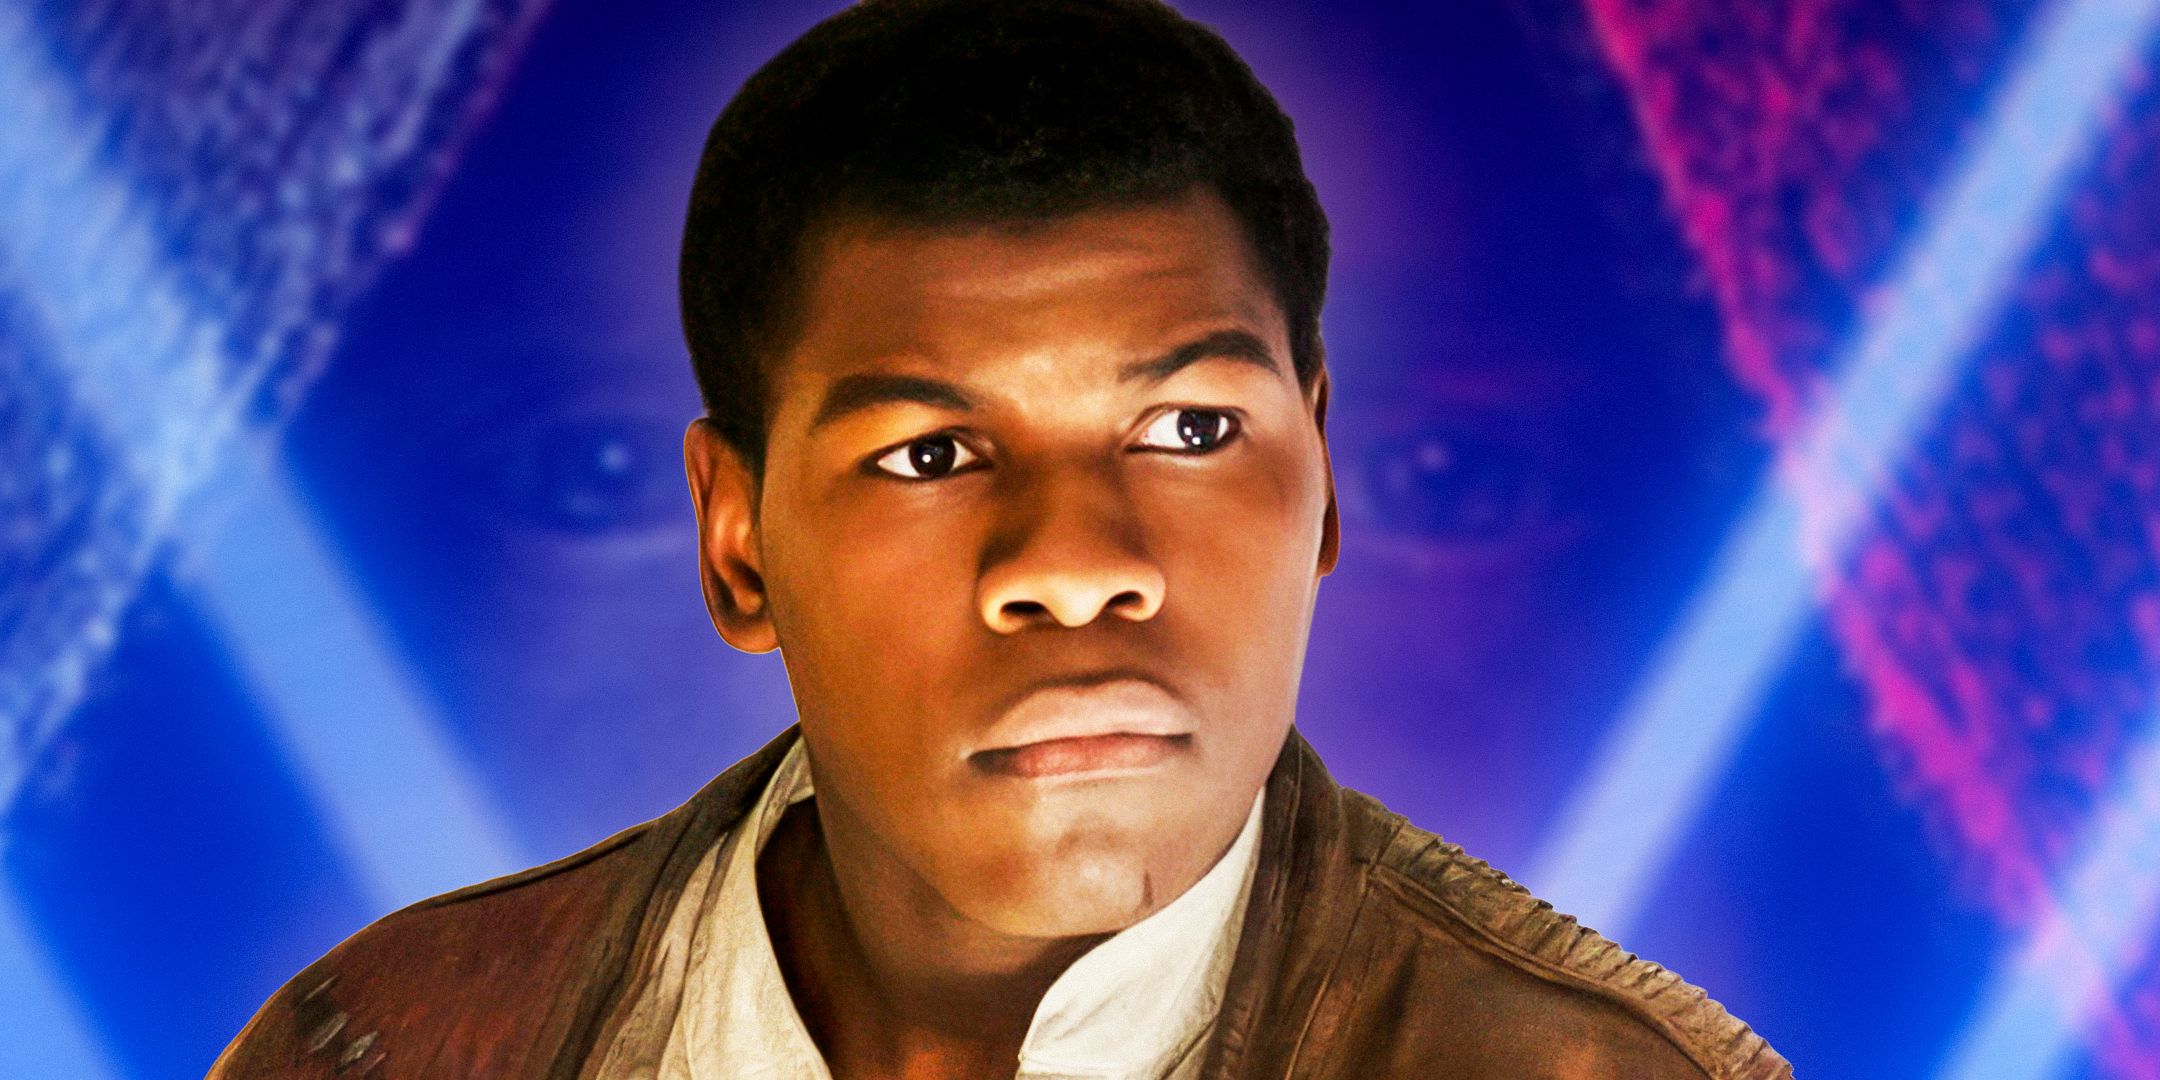 John Boyega as Finn in the Star Wars sequel trilogy edited over a Jedi